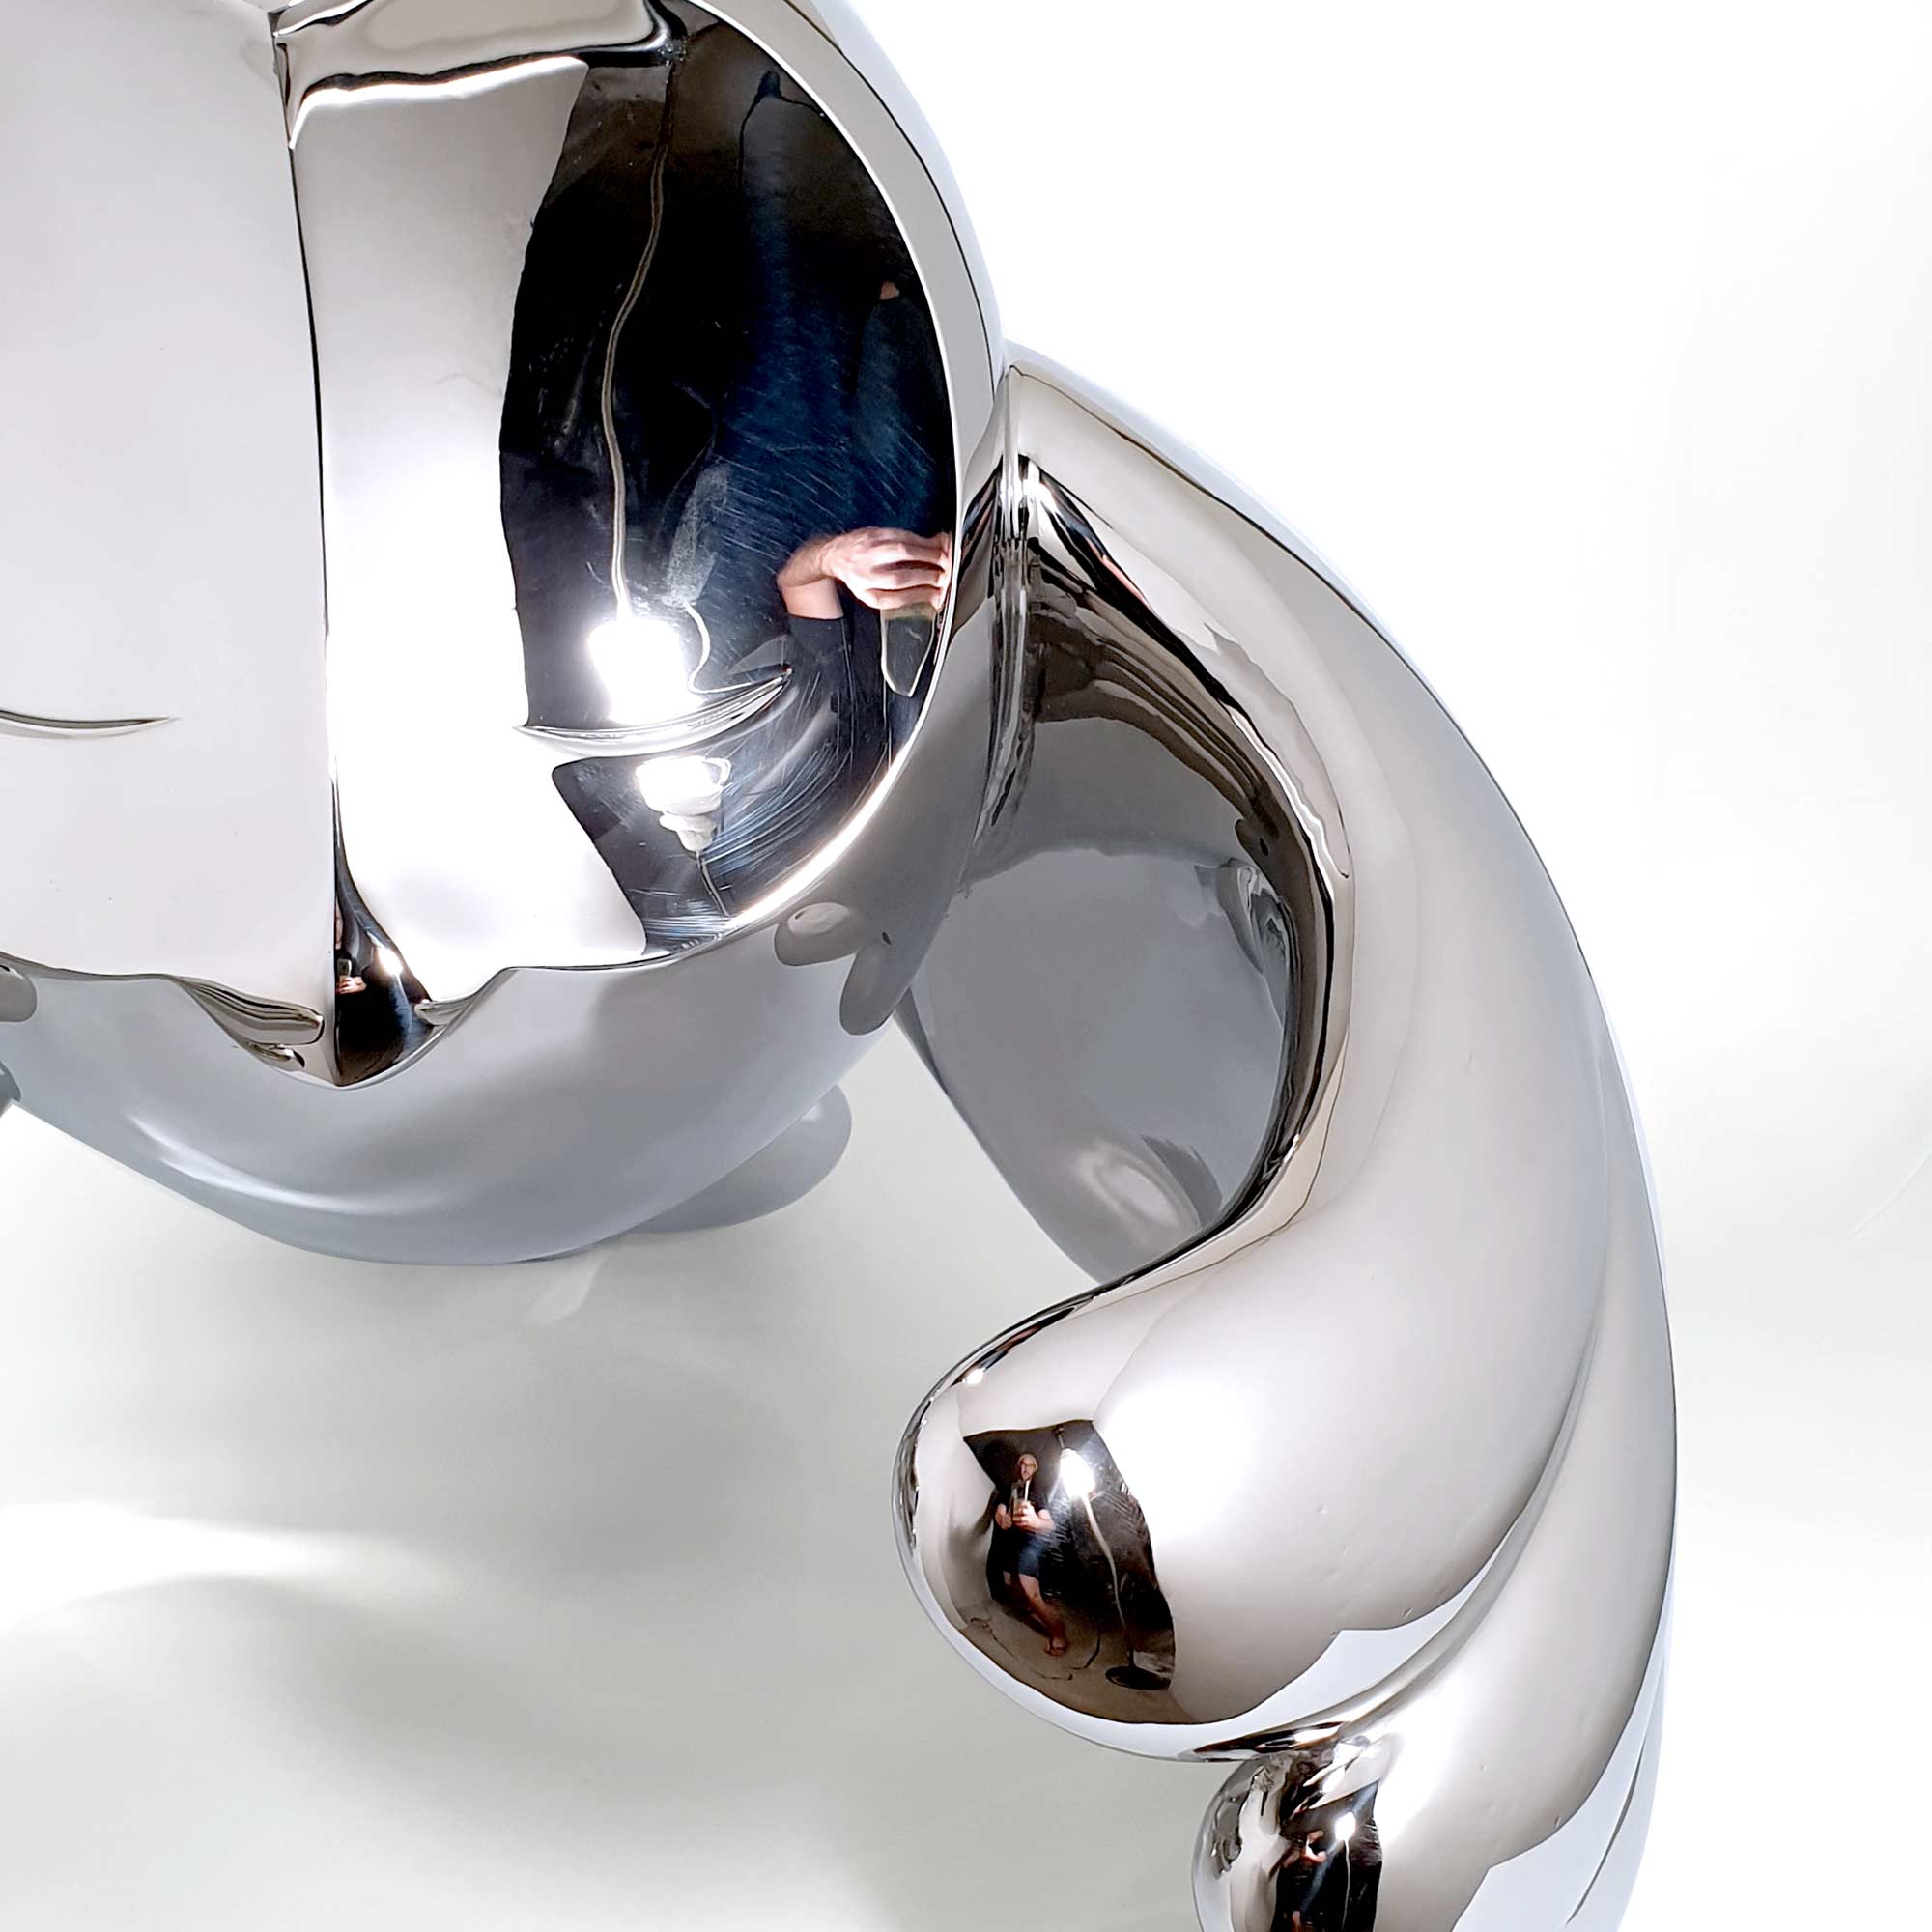 Wind Beneath Owl, bird sculpture, Mirror Polished Stainless Steel Sculpture, by artist Ferdi B Dick, close up